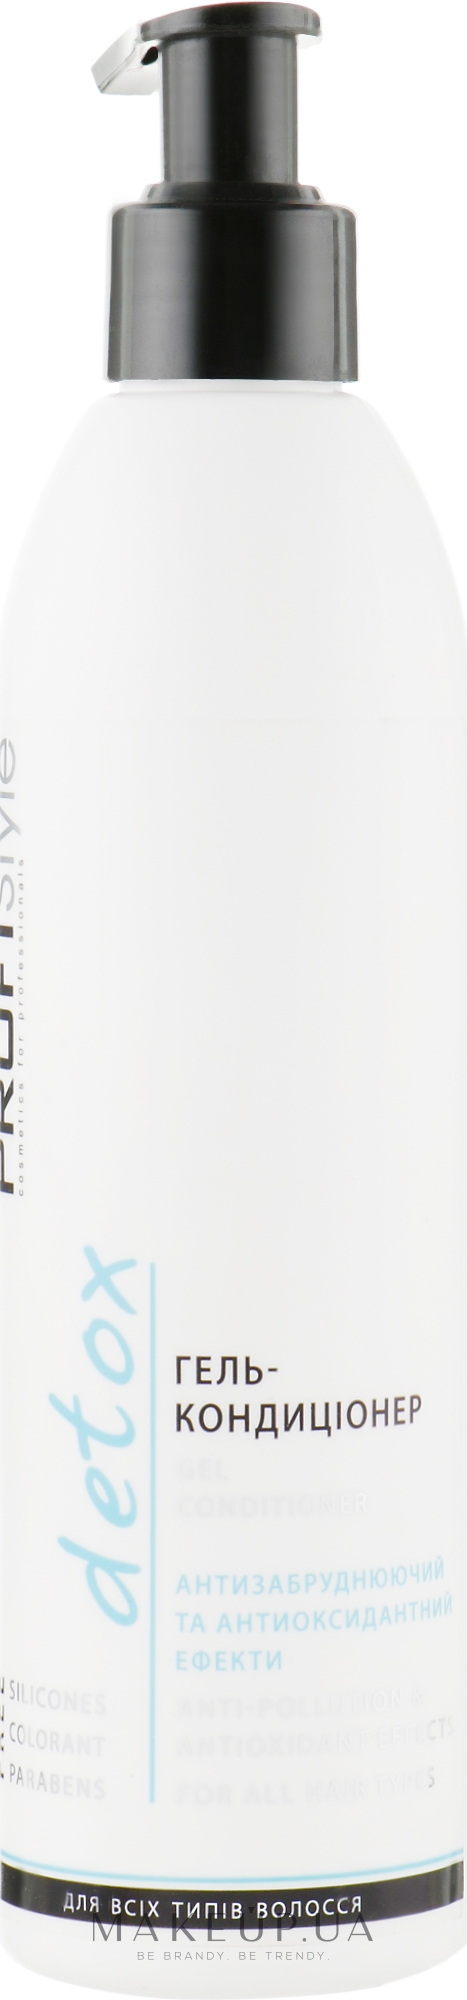 Гель-кондиціонер для волосся - Profi style Detox Gel Conditioner — фото 250ml